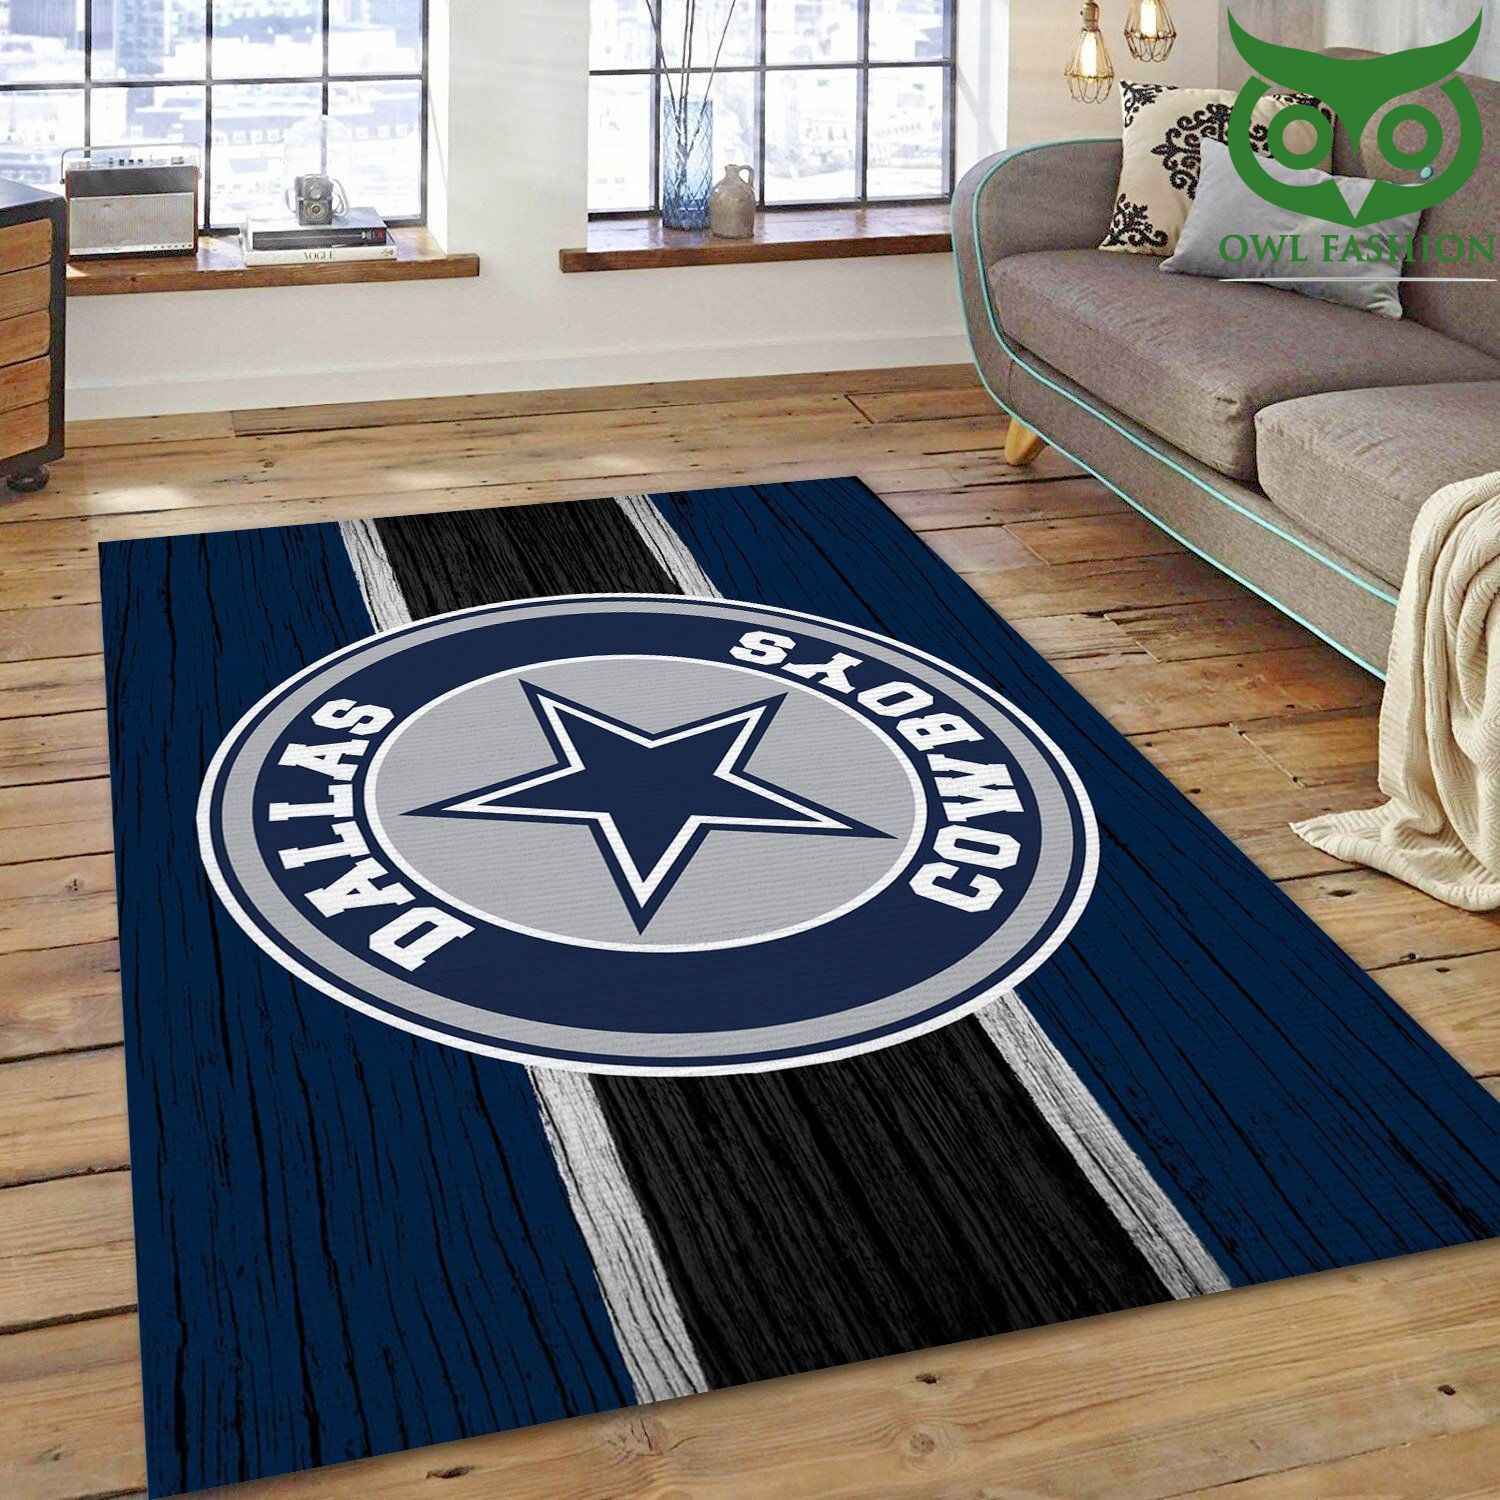 Dallas Cowboys Nfl Area carpet rug Home and floor Decoration